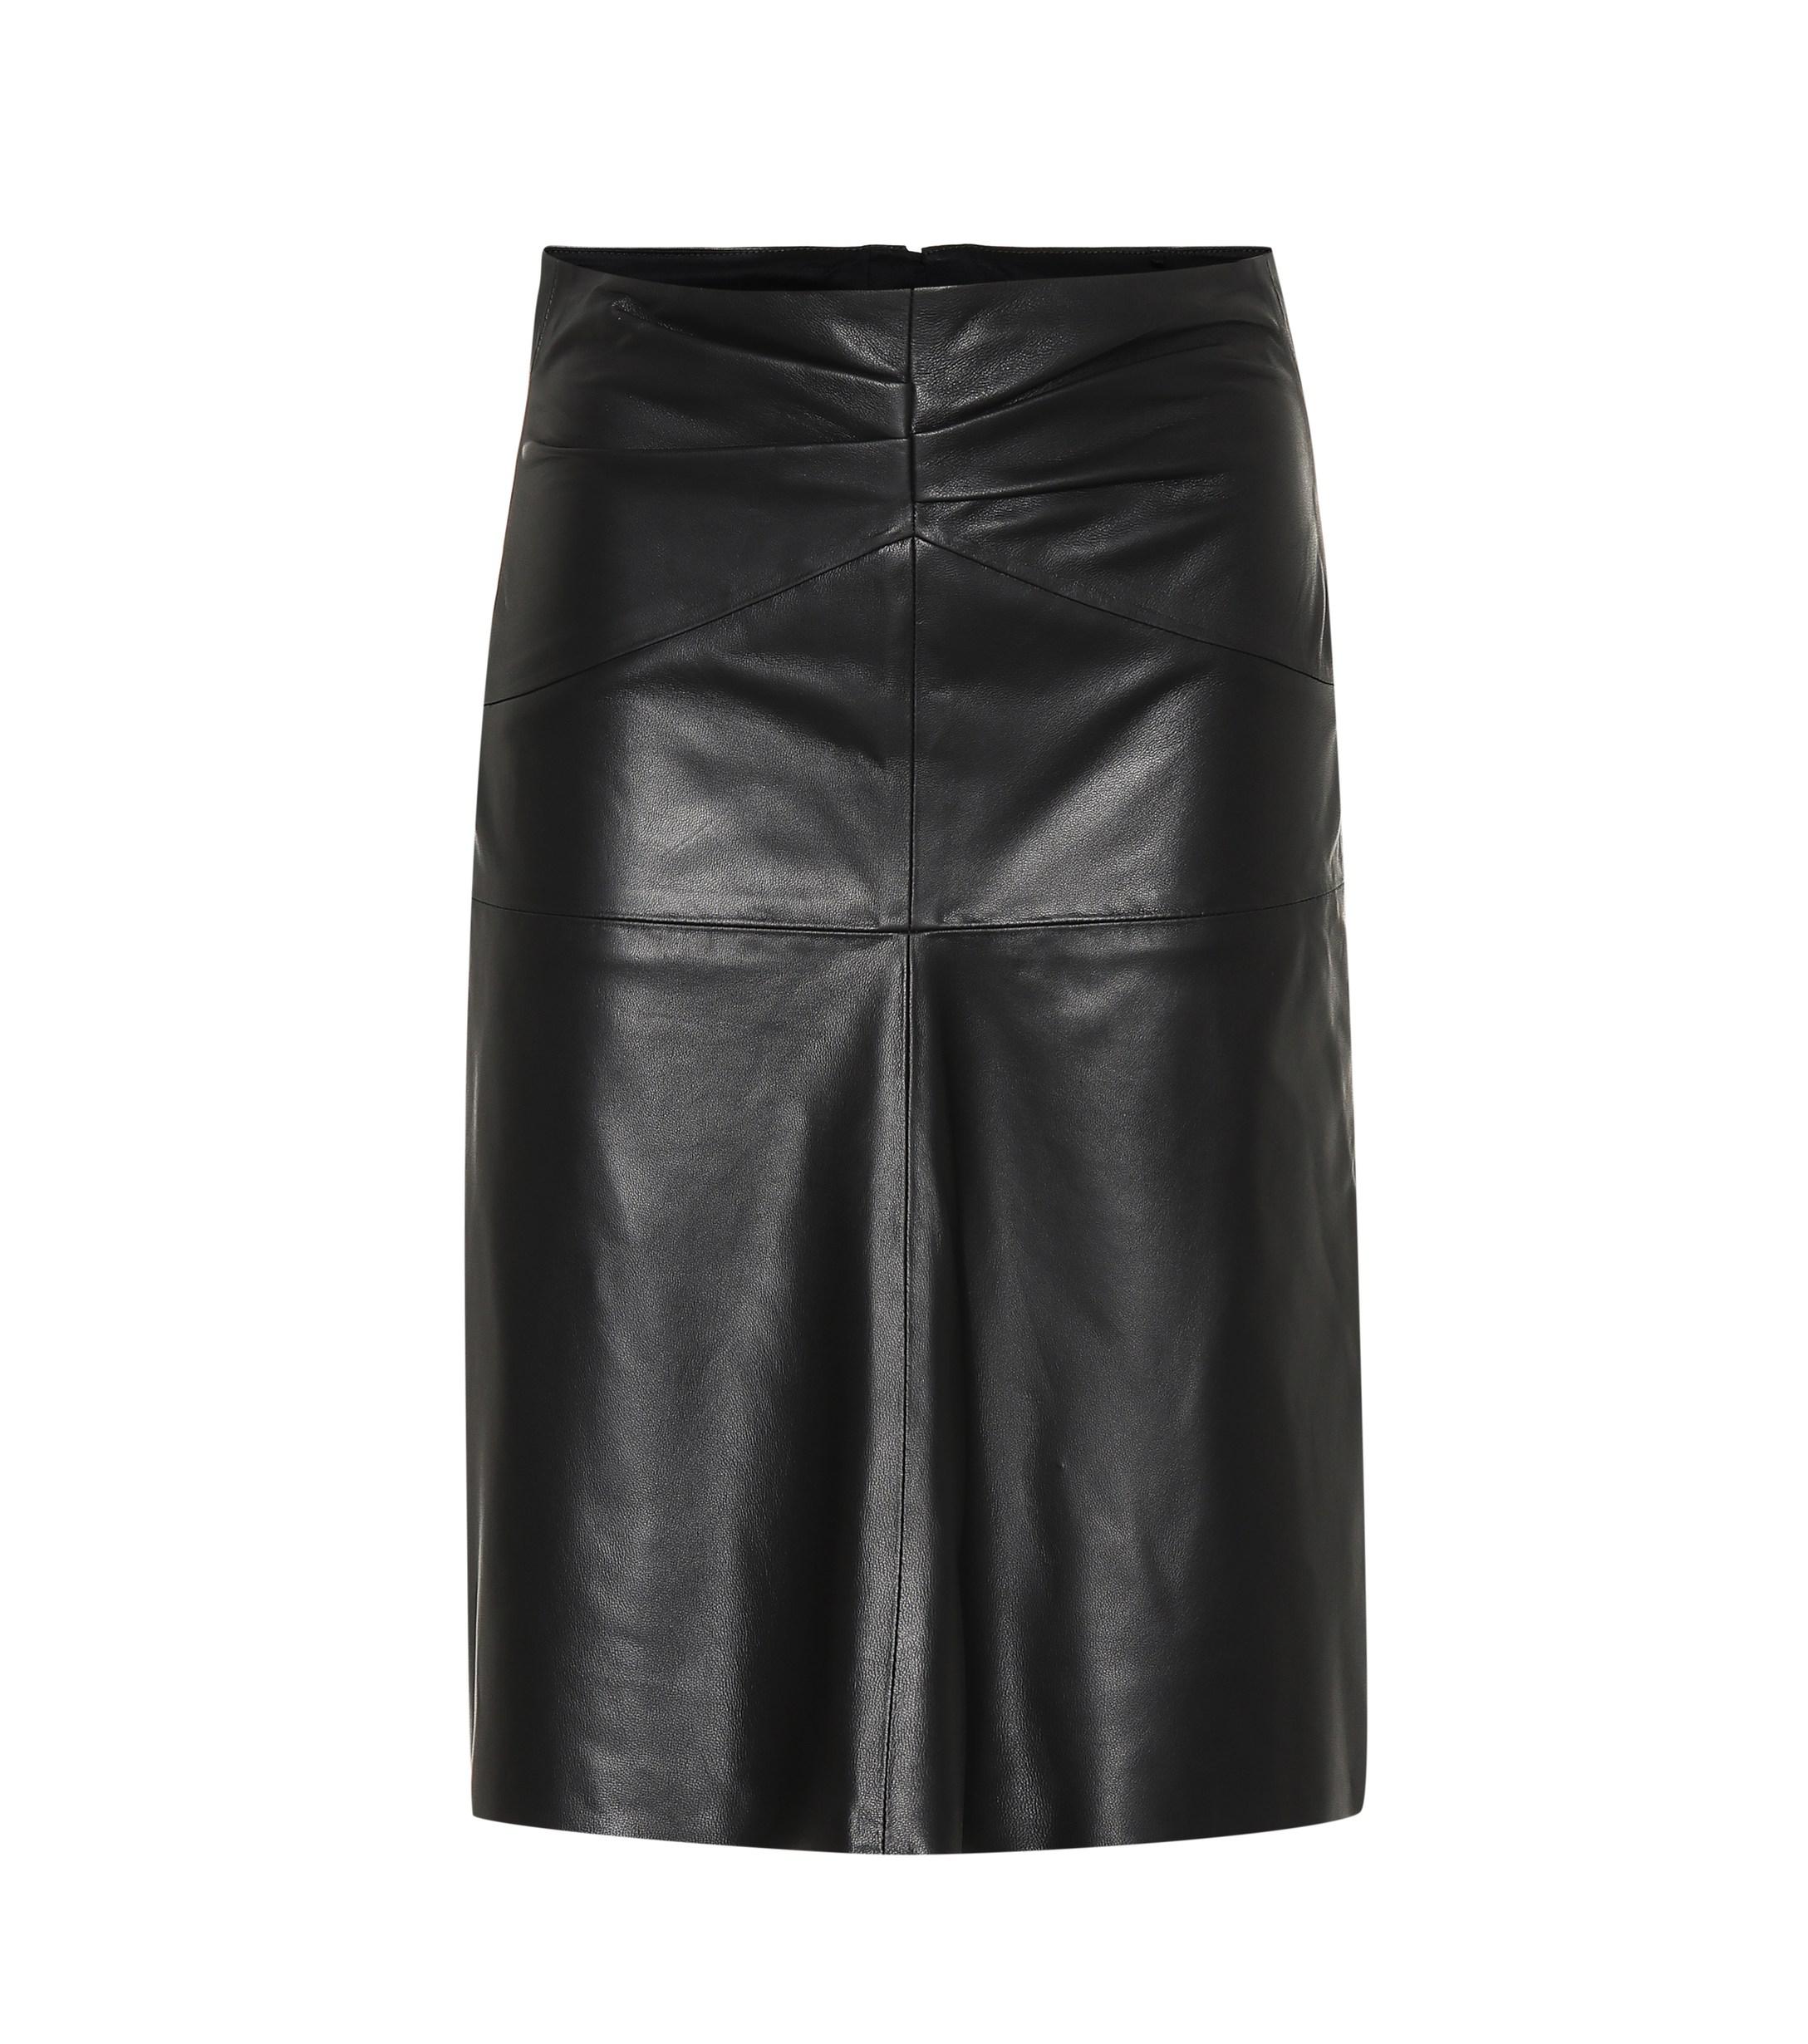 Lyst - Isabel Marant Gladys Leather Midi Skirt in Black